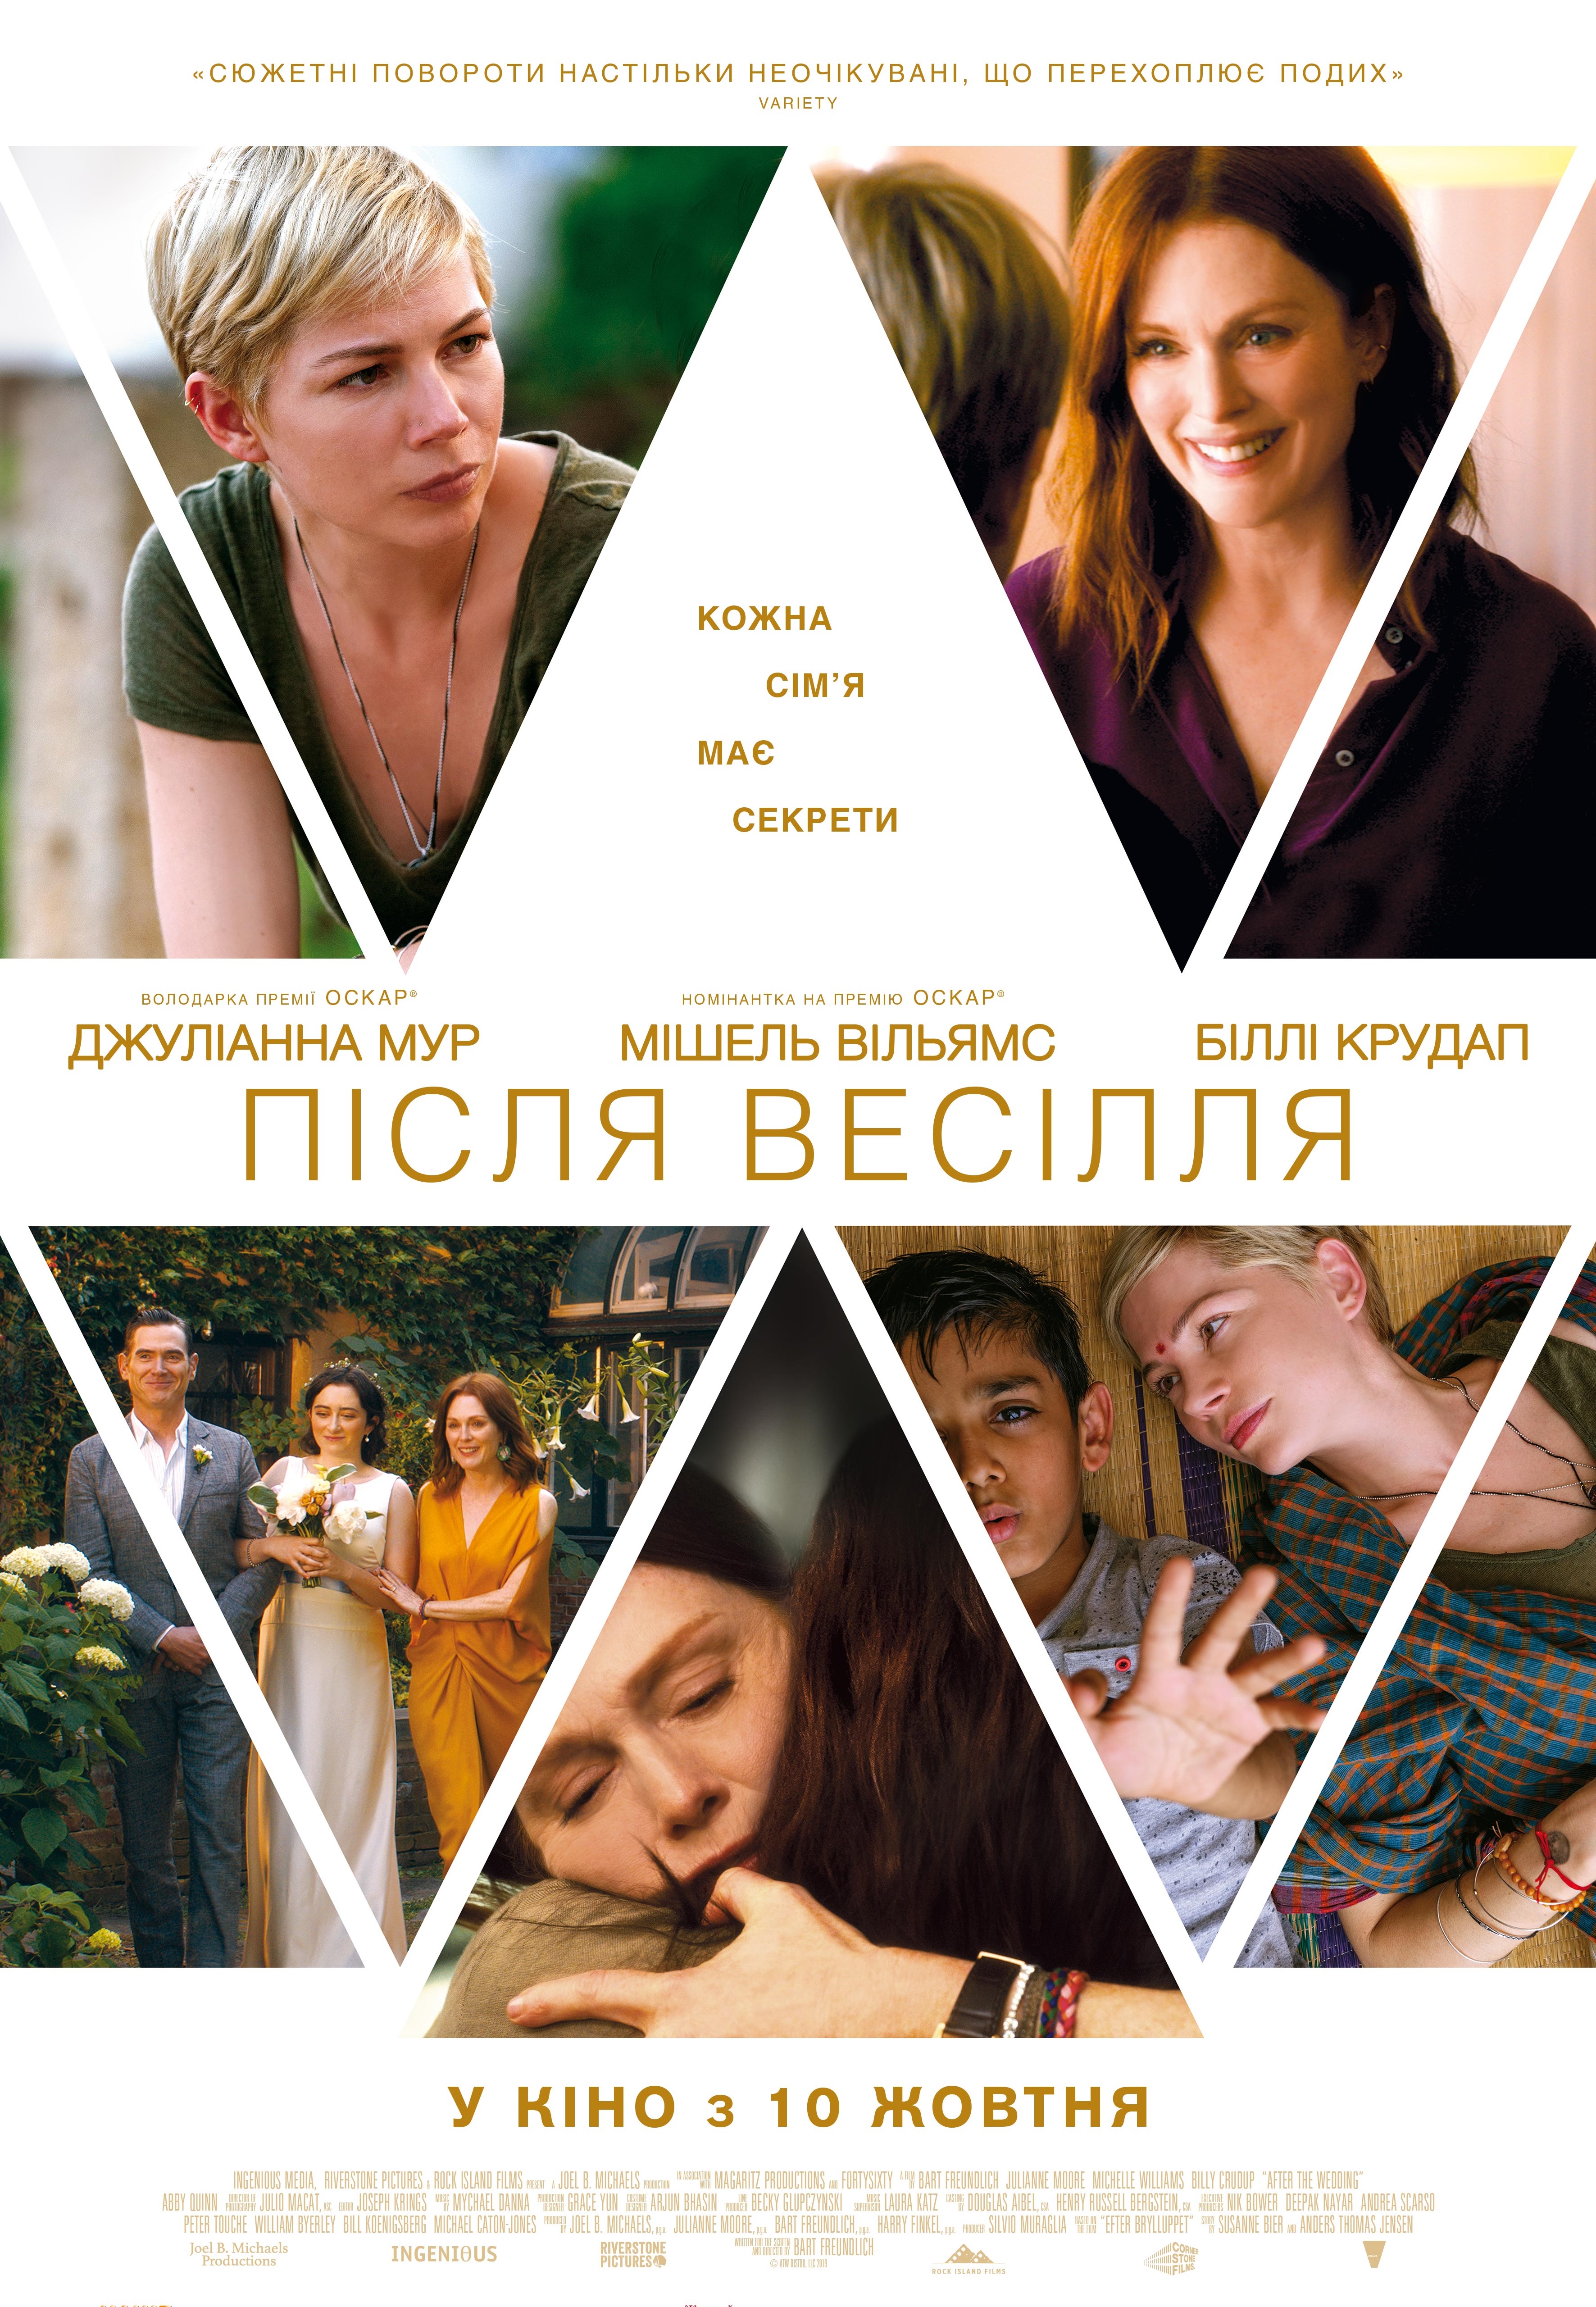 After poster. После свадьбы / after the Wedding (2019).